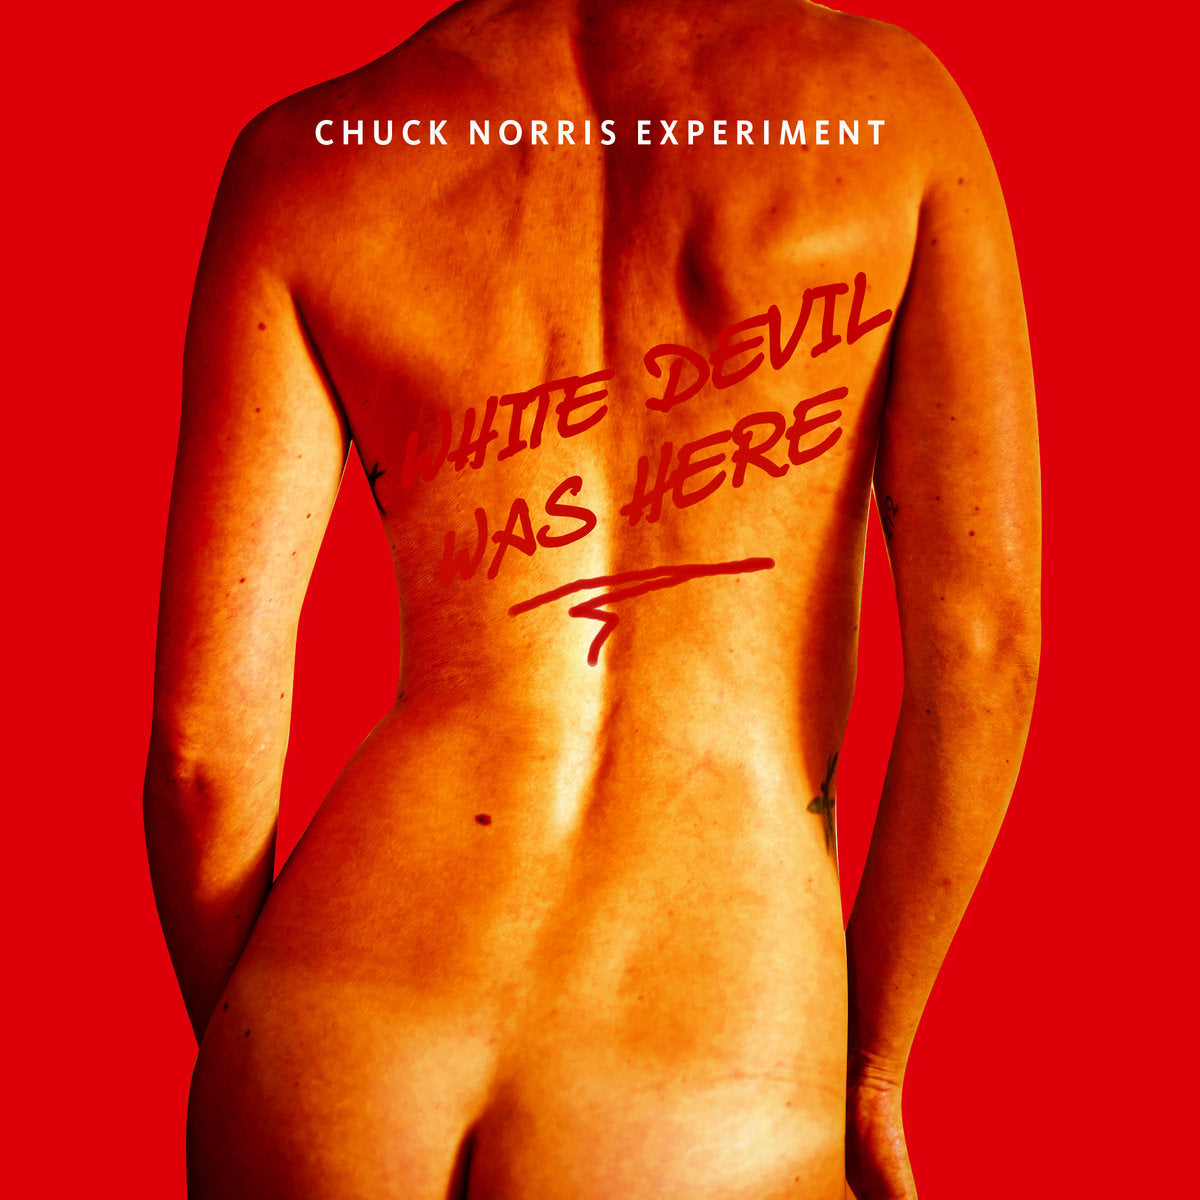 Chuck Norris Experiment- White Devil 7" ~RAREST CLEAR WAX / 110 COPIES PRESSED!